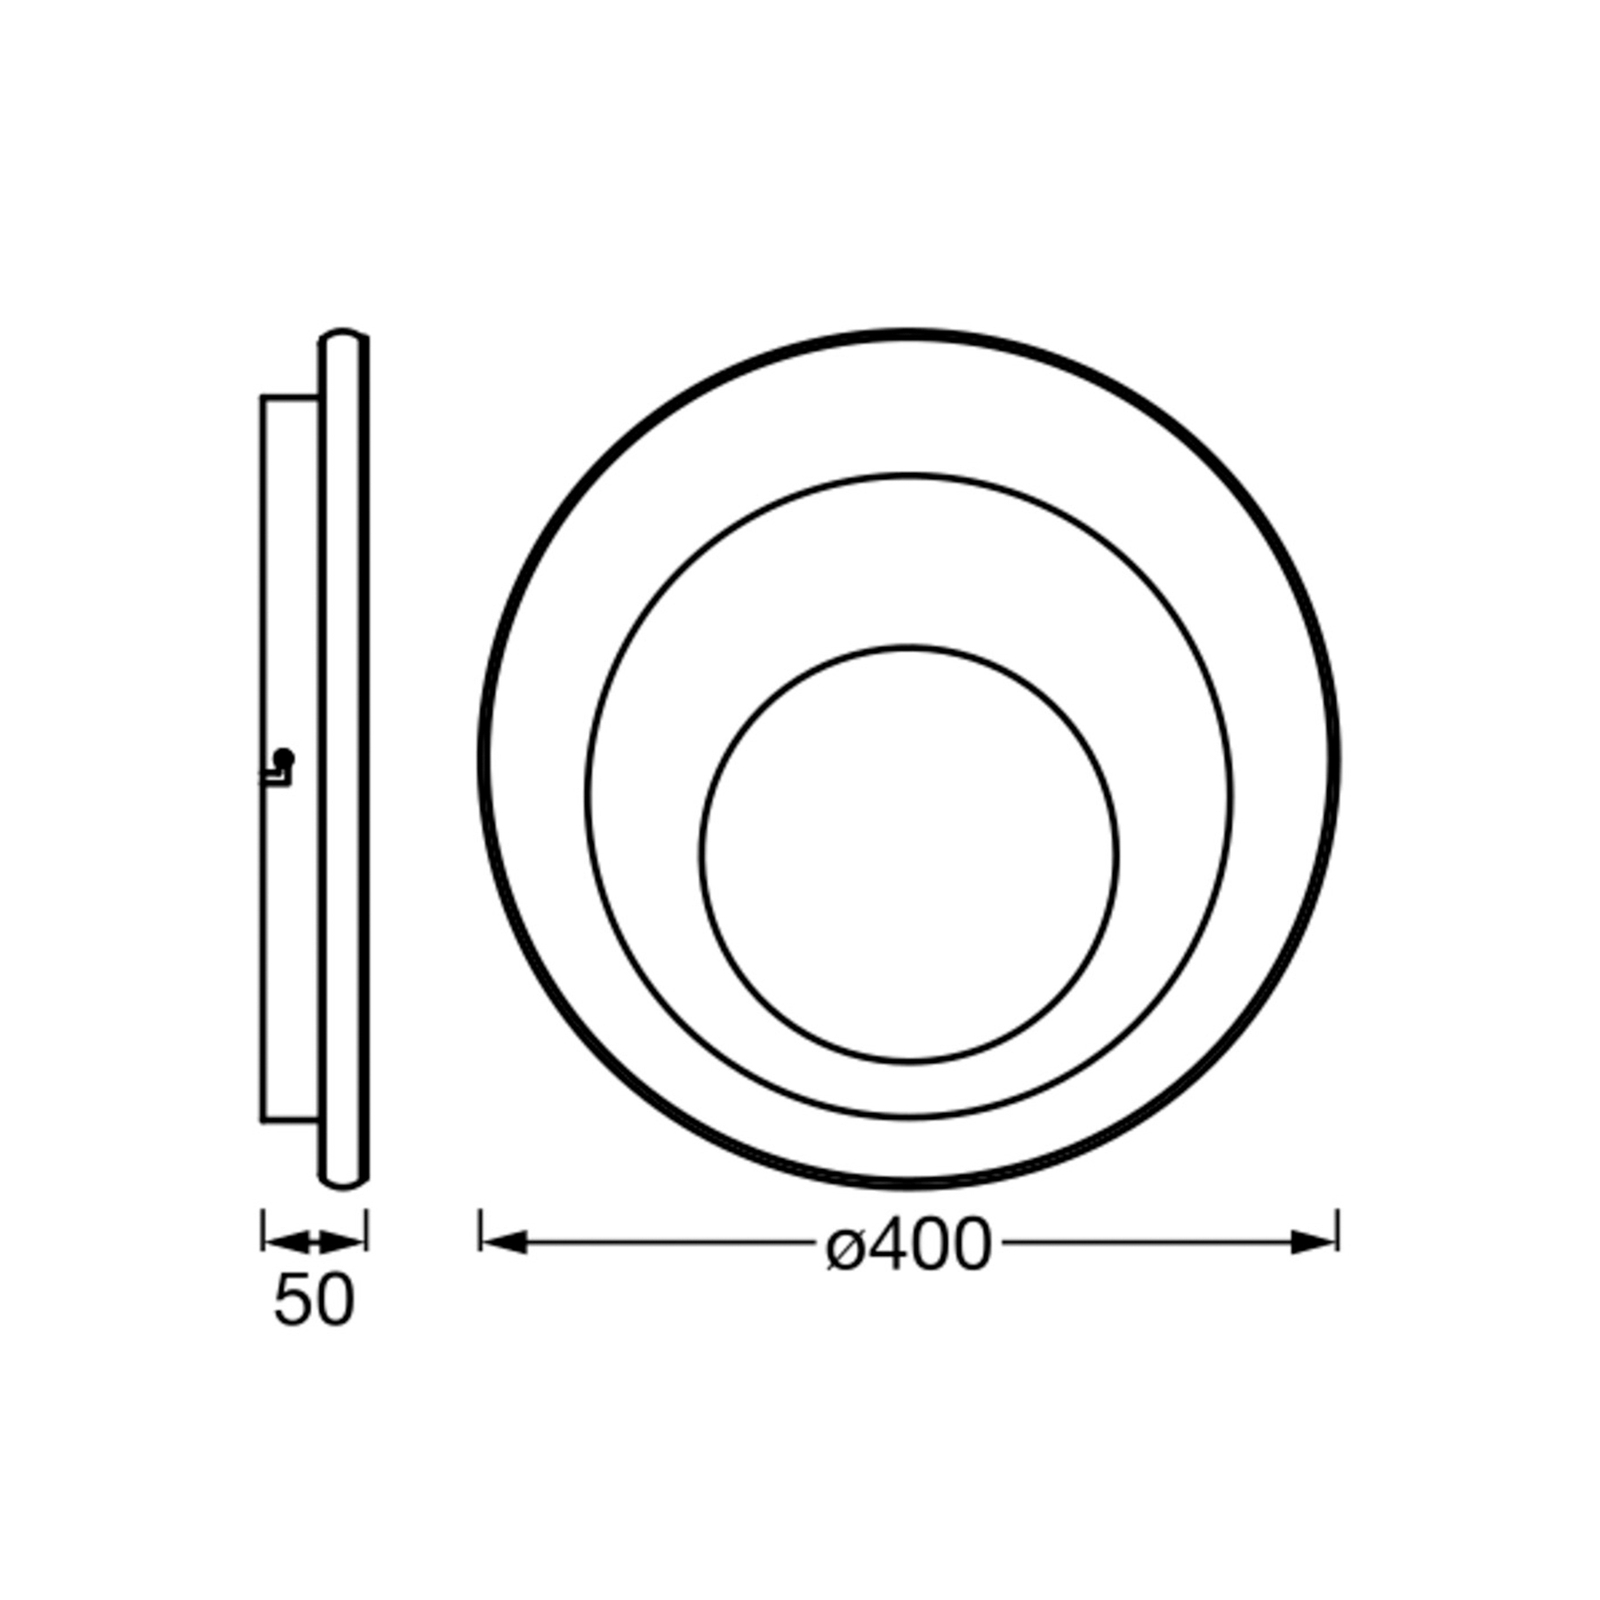 LEDVANCE Orbis Slim Spiral Round plafondlamp Ø40cm